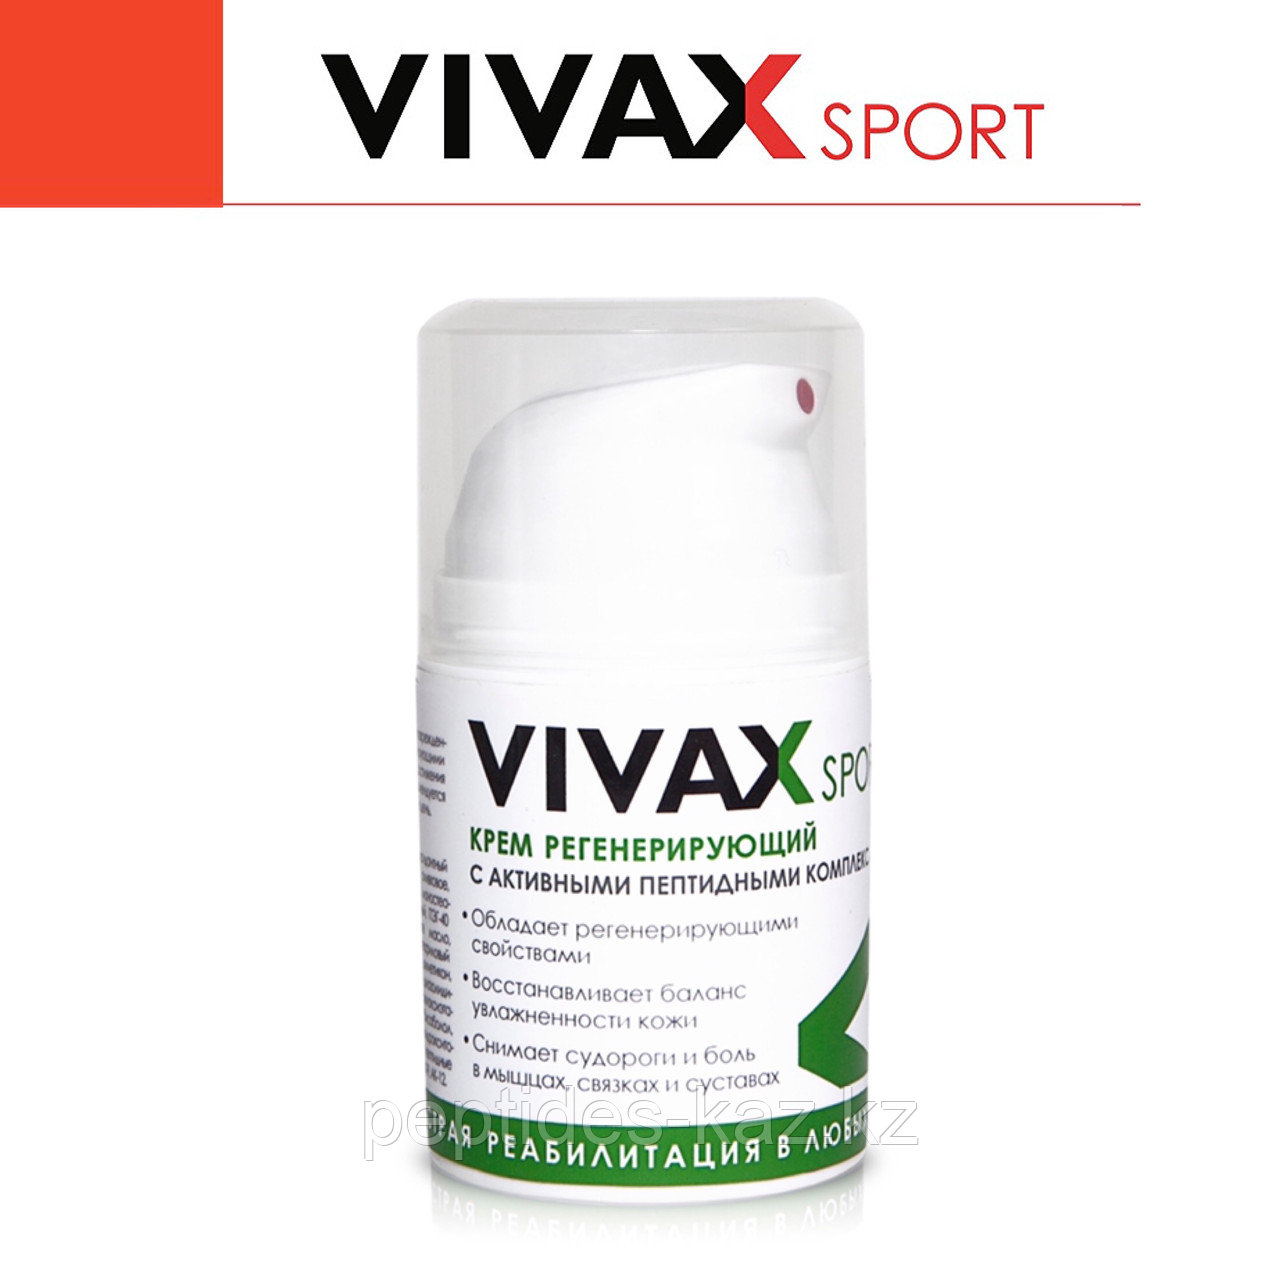 VIVAX SPORT регенирирующий крем с пептидами 50 мл